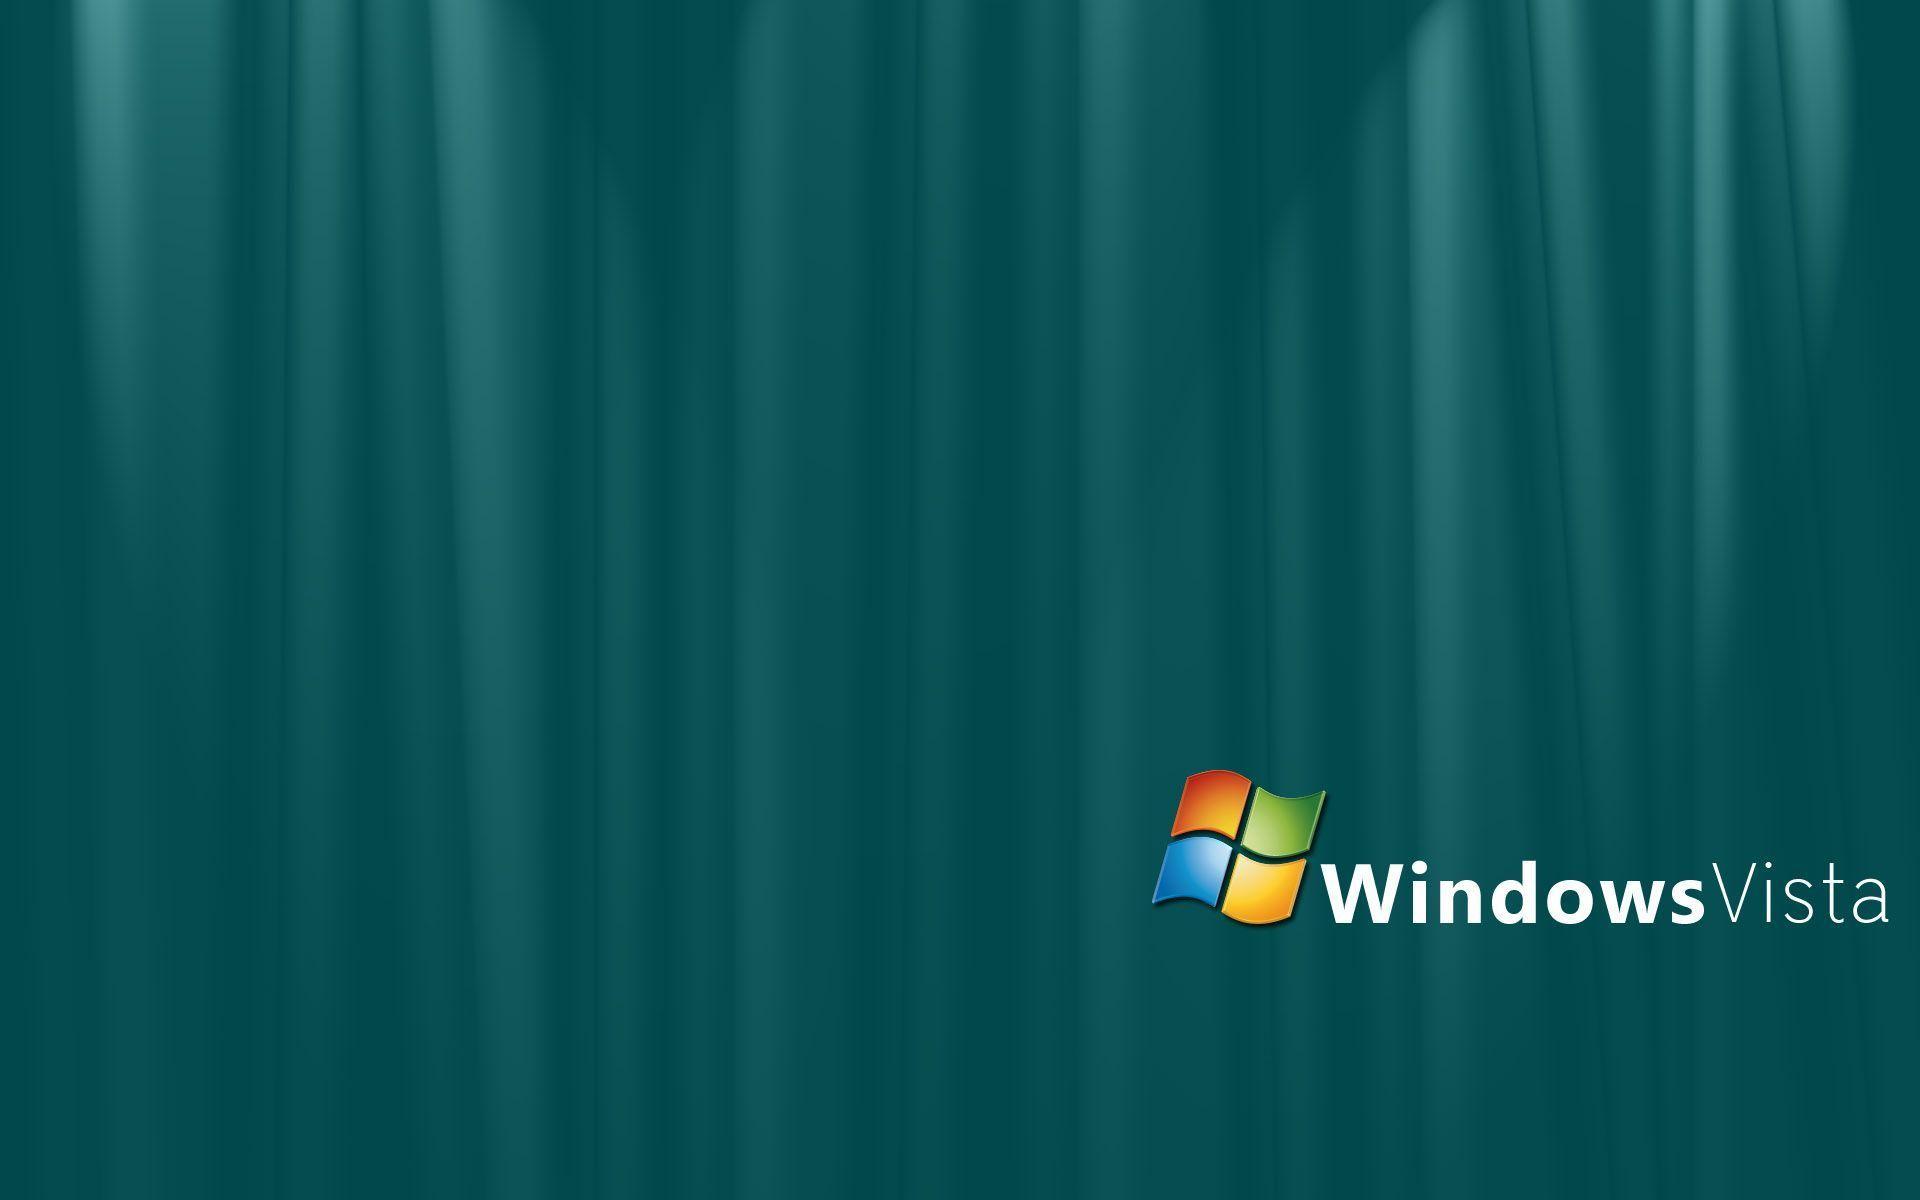 Windows Vista Wallpaper 1920X1080 wallpaper